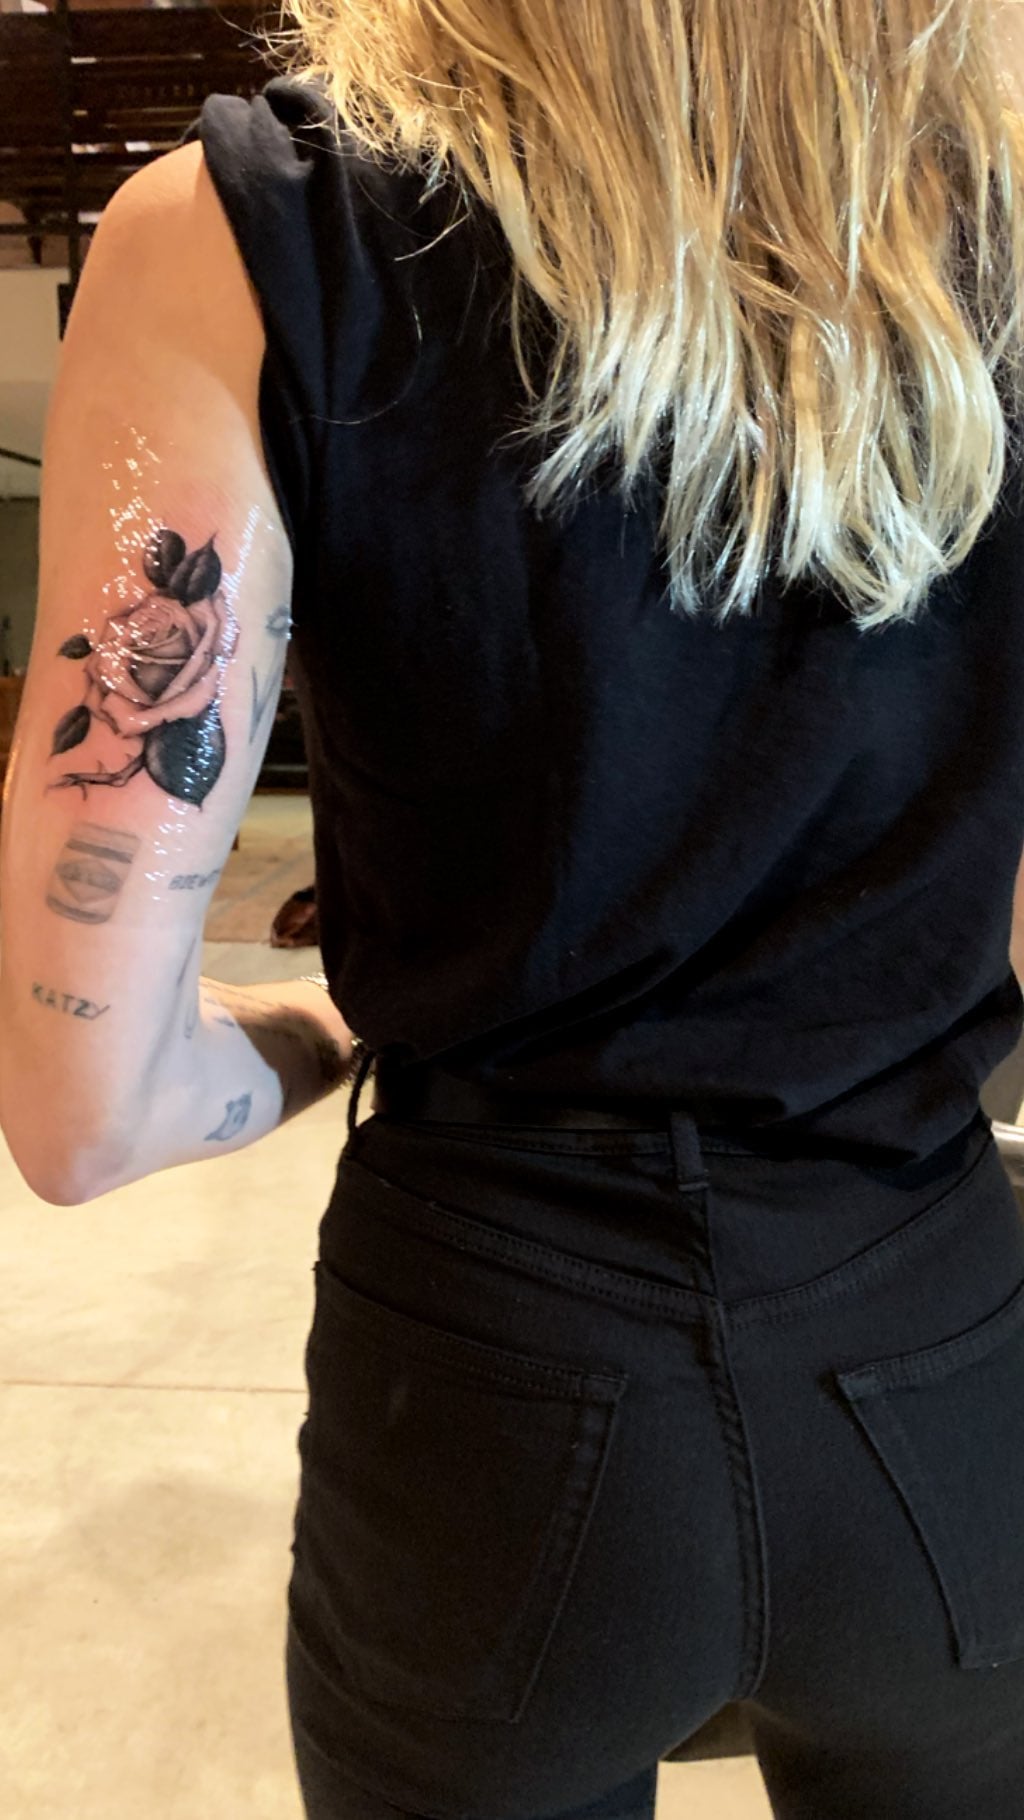 miley cyrus rose tattoo